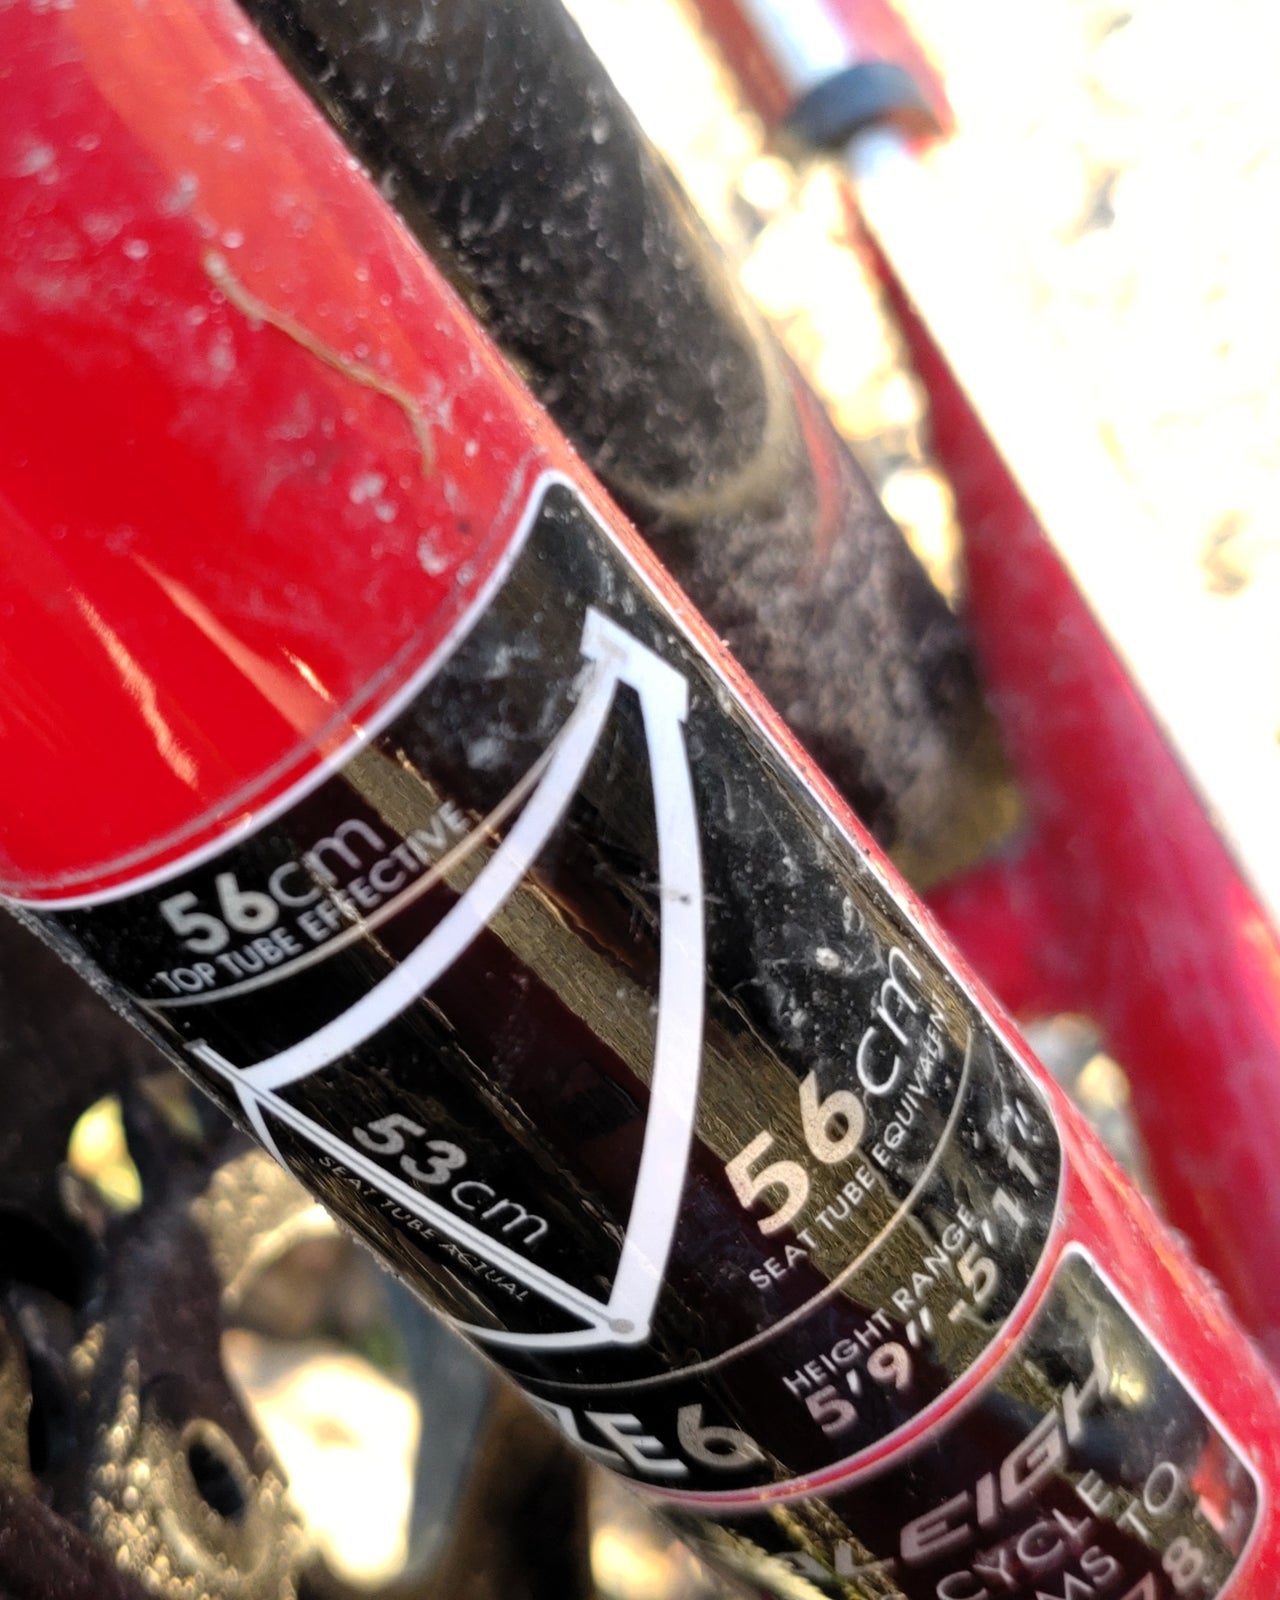 Cross cykel, Raleigh Maverick comp, 22 gear